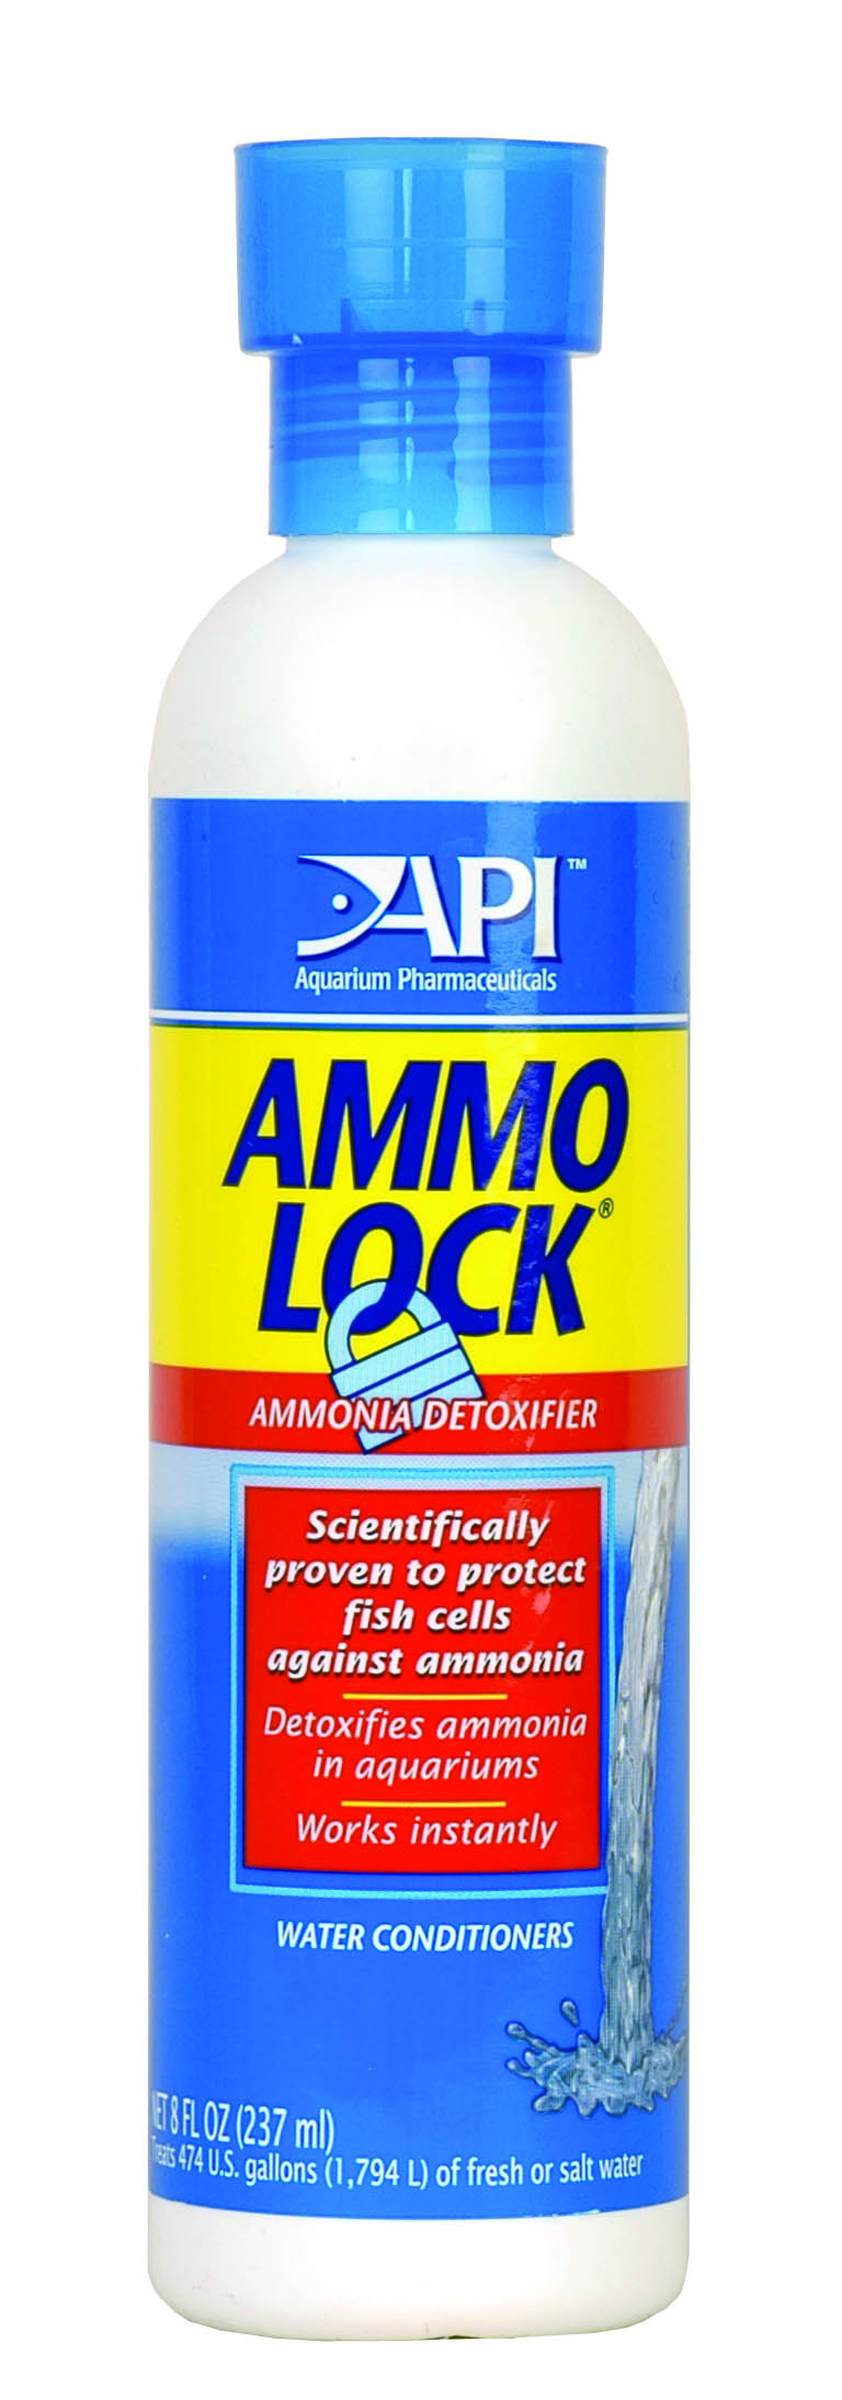 AMMO LOCK